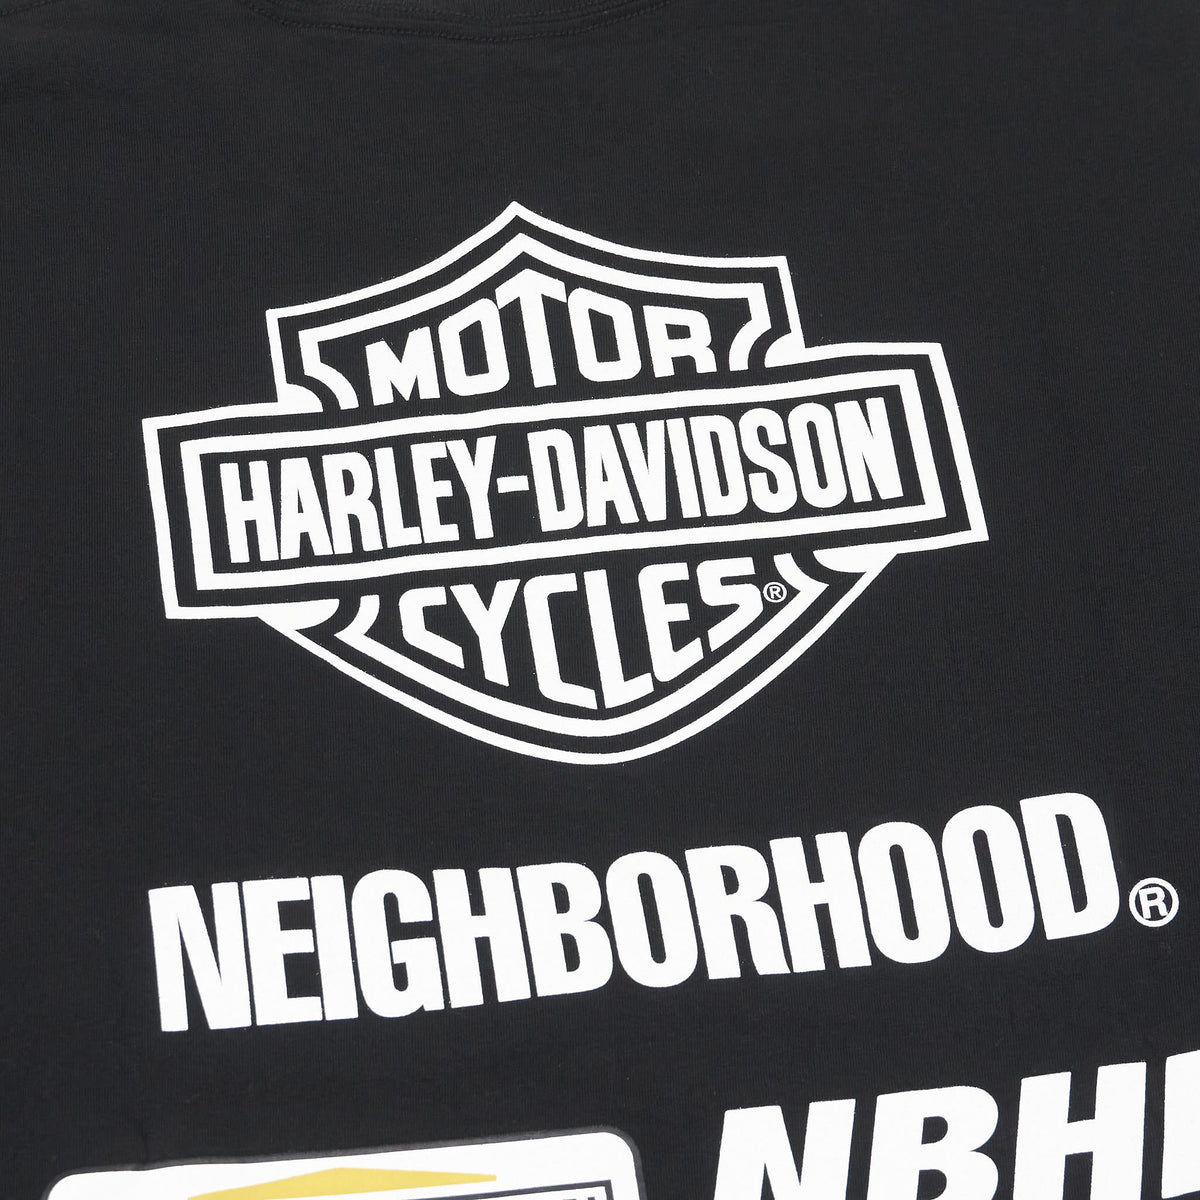 Neighborhood x Harley Davidson Skeleton Long Sleeve Crew Neck T-Shirt